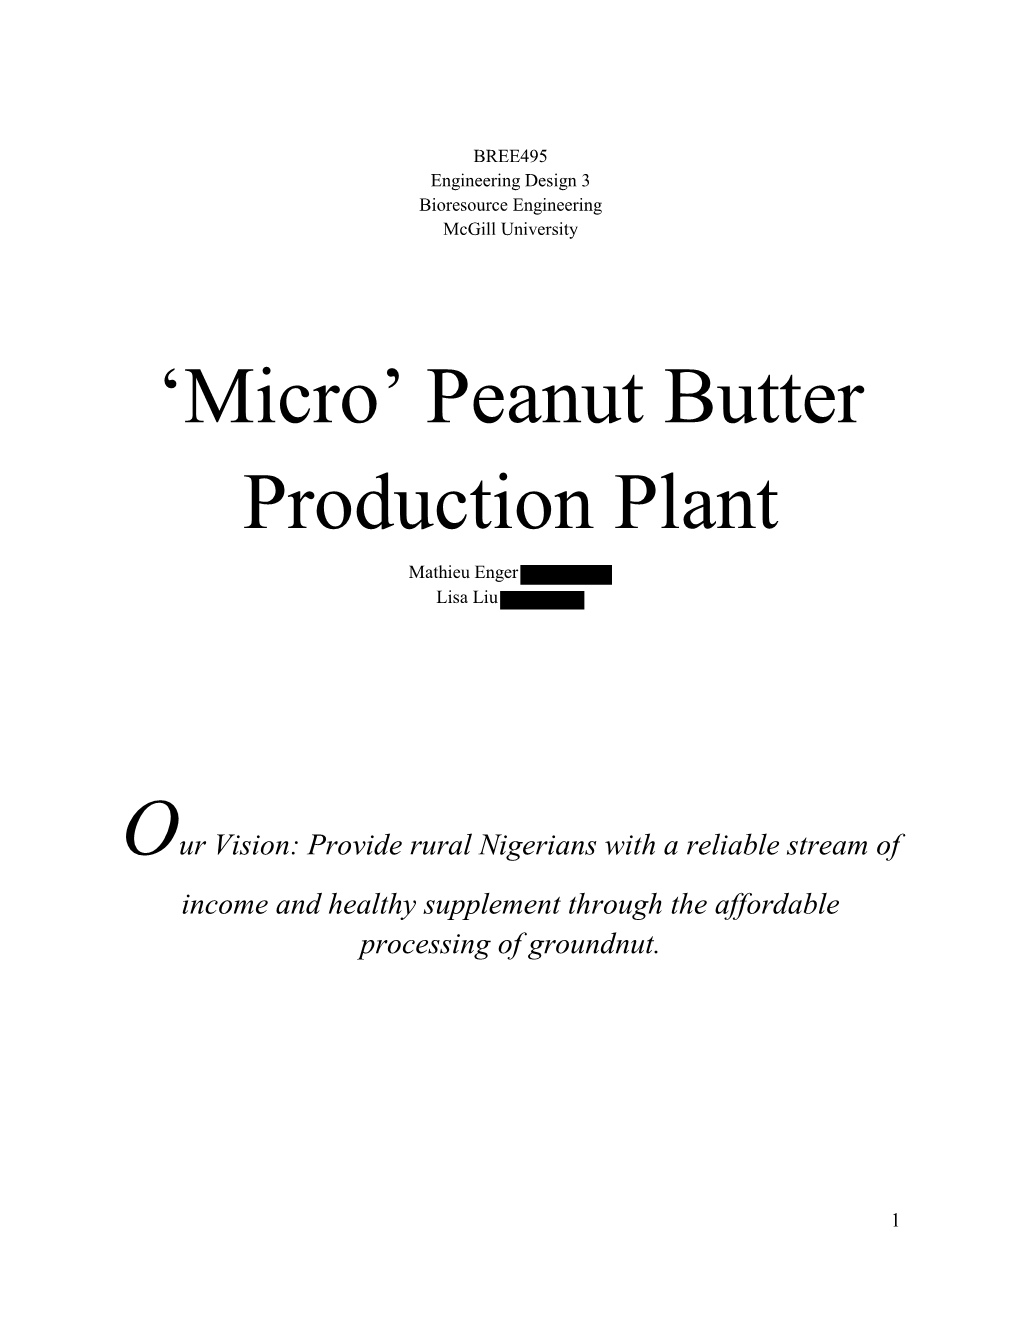 'Micro' Peanut Butter Production Plant